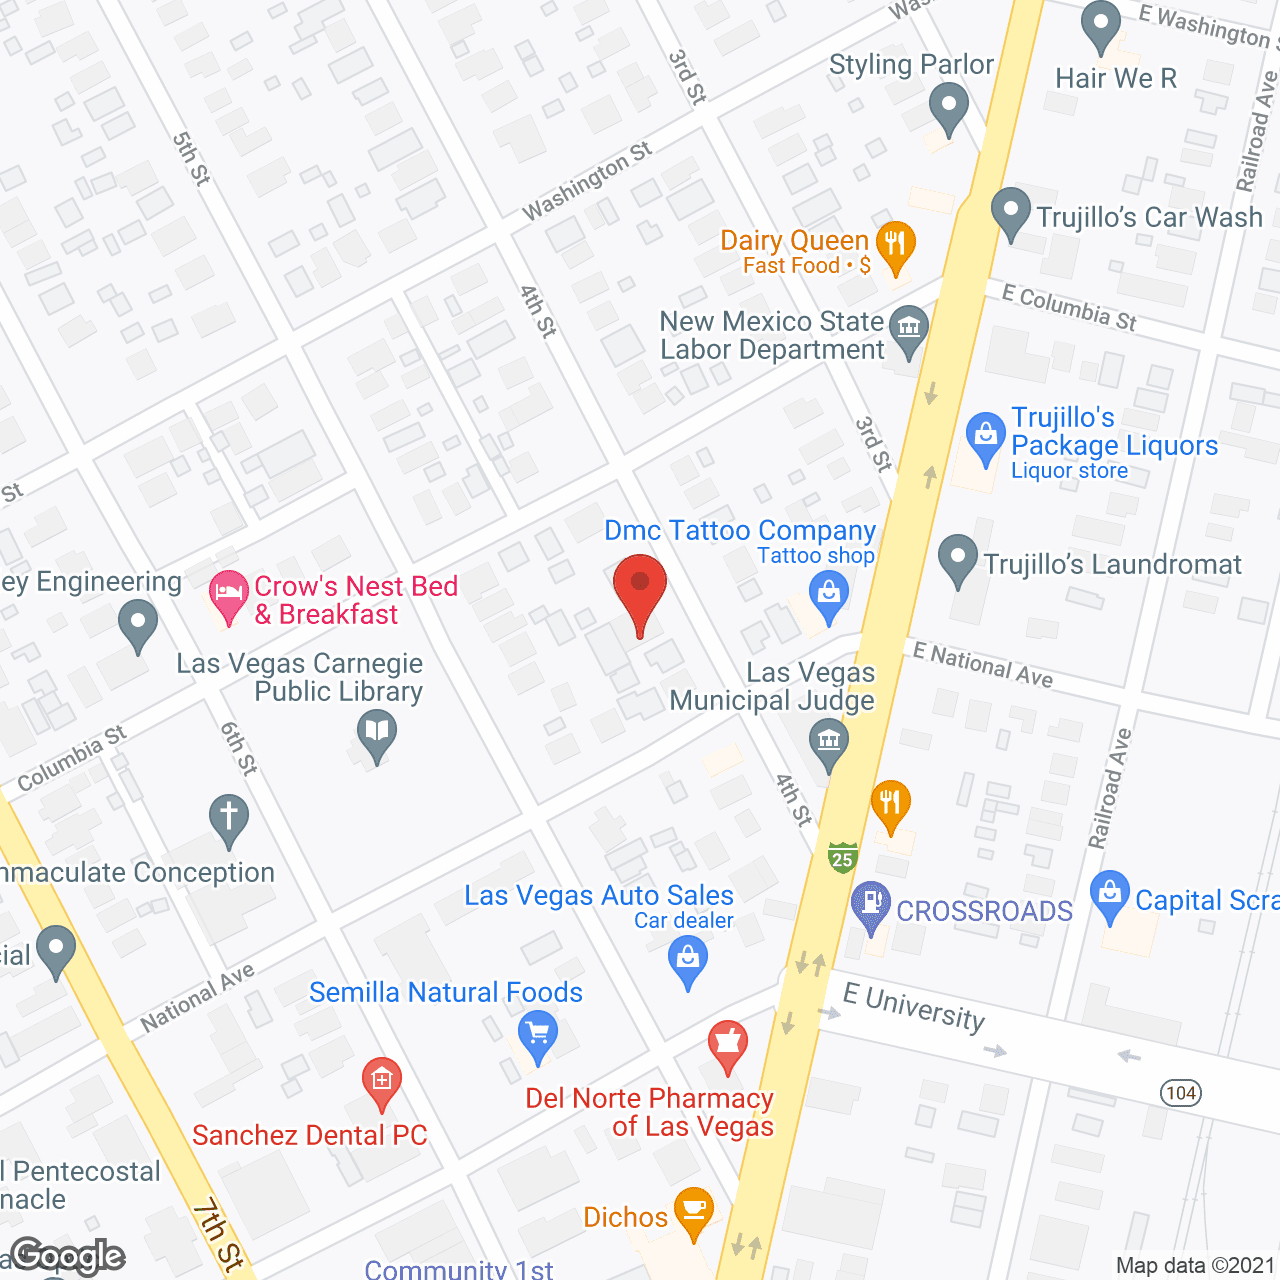 Vegas Grandes Nursing Home in google map